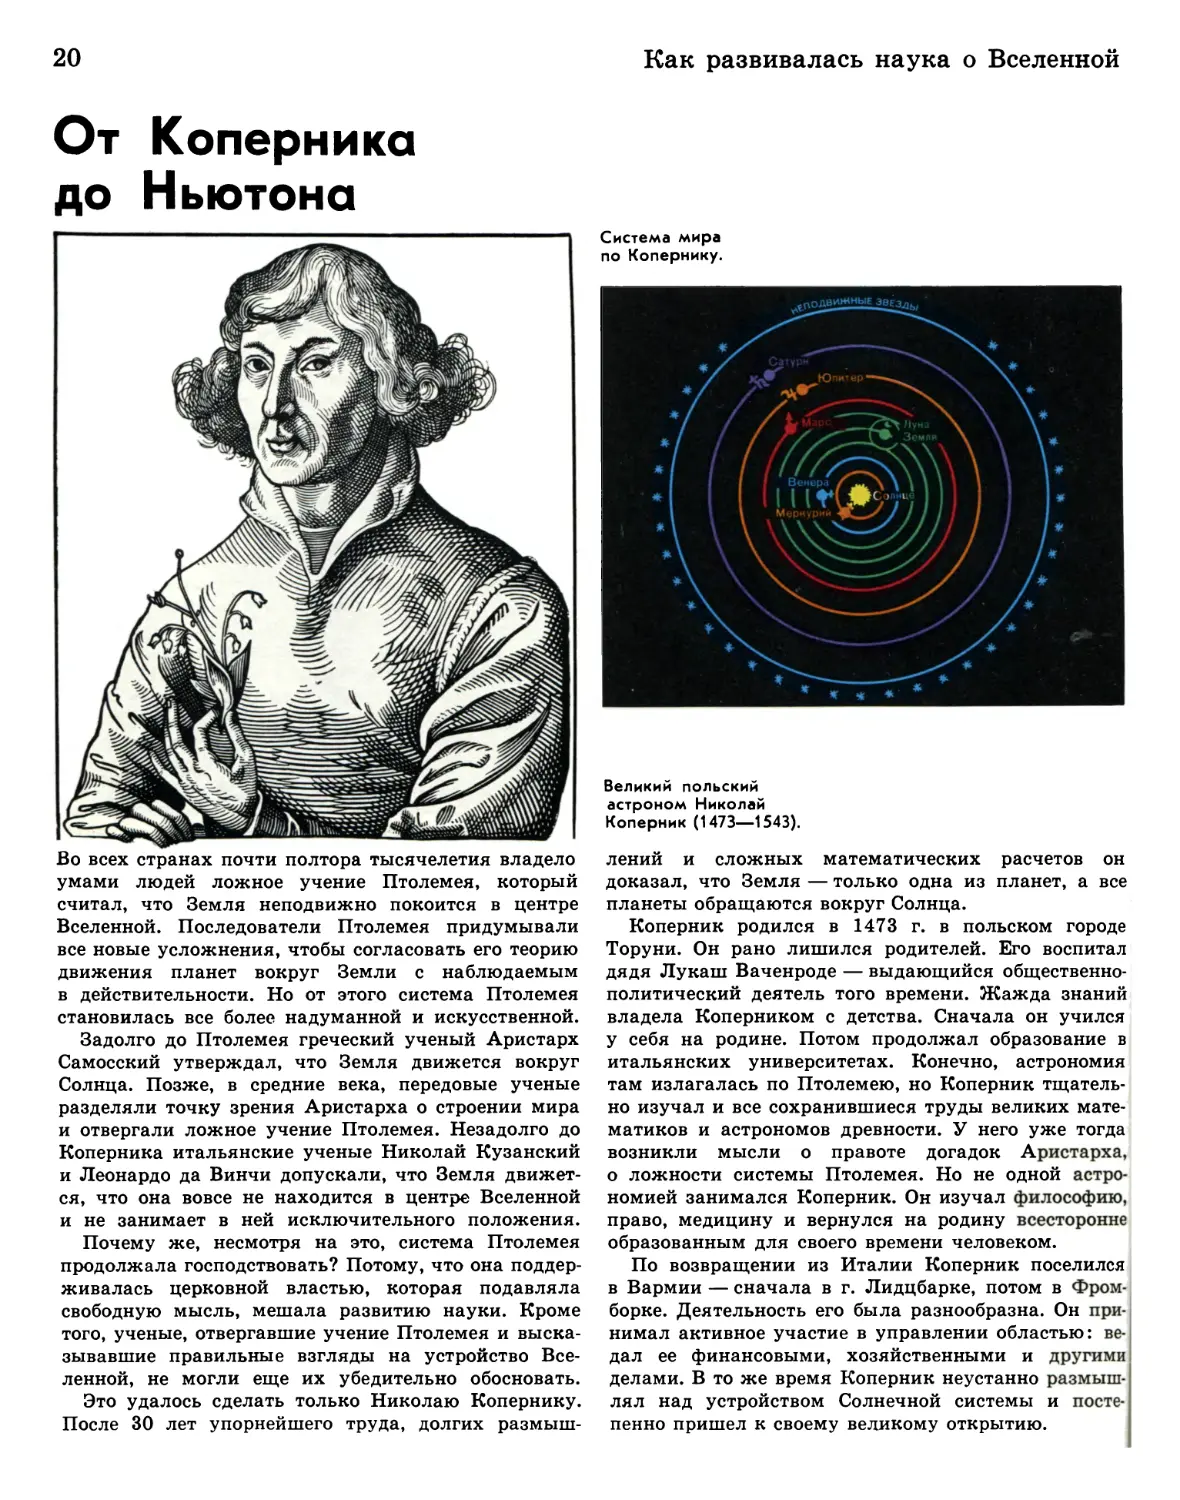 От Коперника до Ньютона